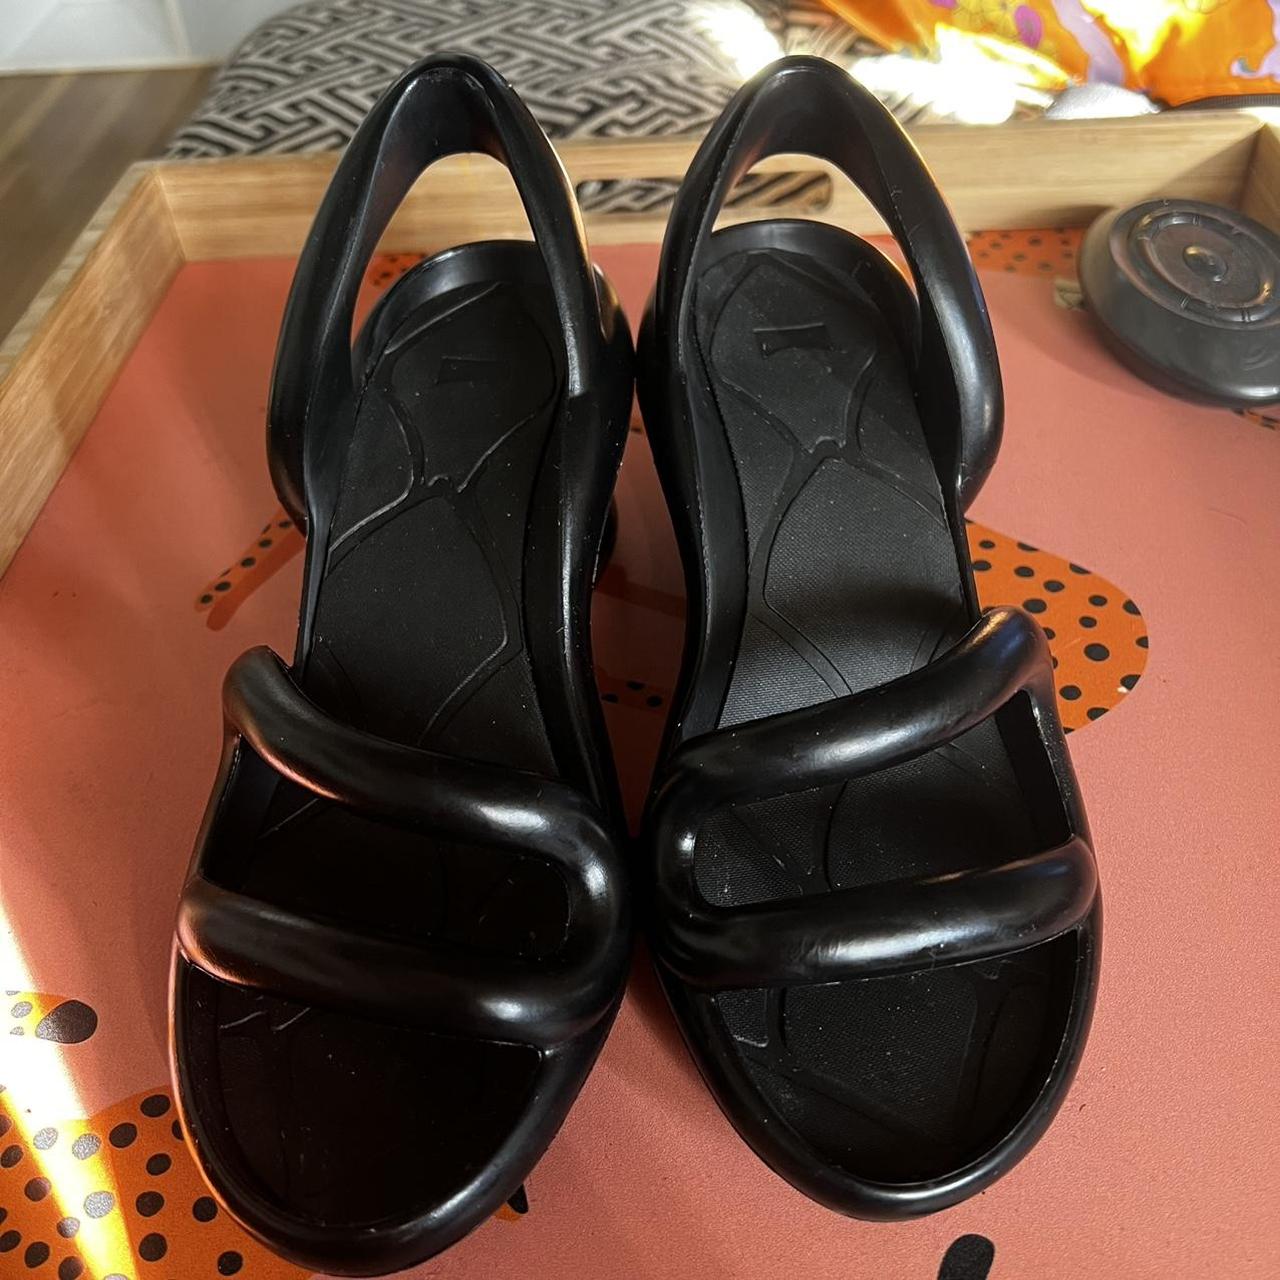 Product Image 2 - Black Camper Kobarah Heels
These shoes